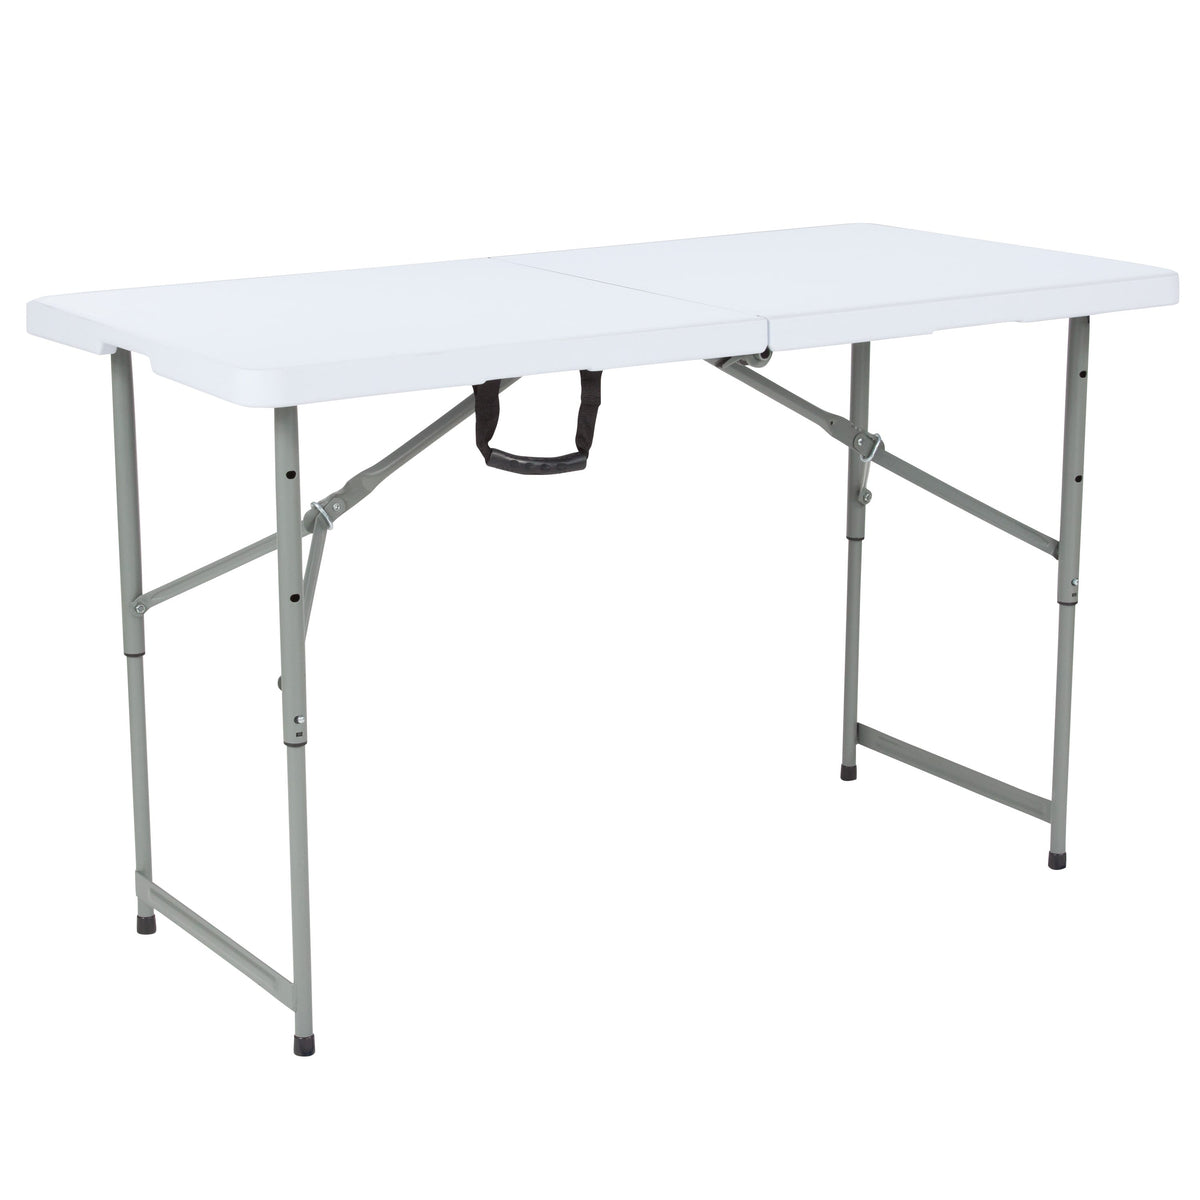 4-Foot Height Adjustable Bi-Fold Granite White Plastic Folding Table with Handle